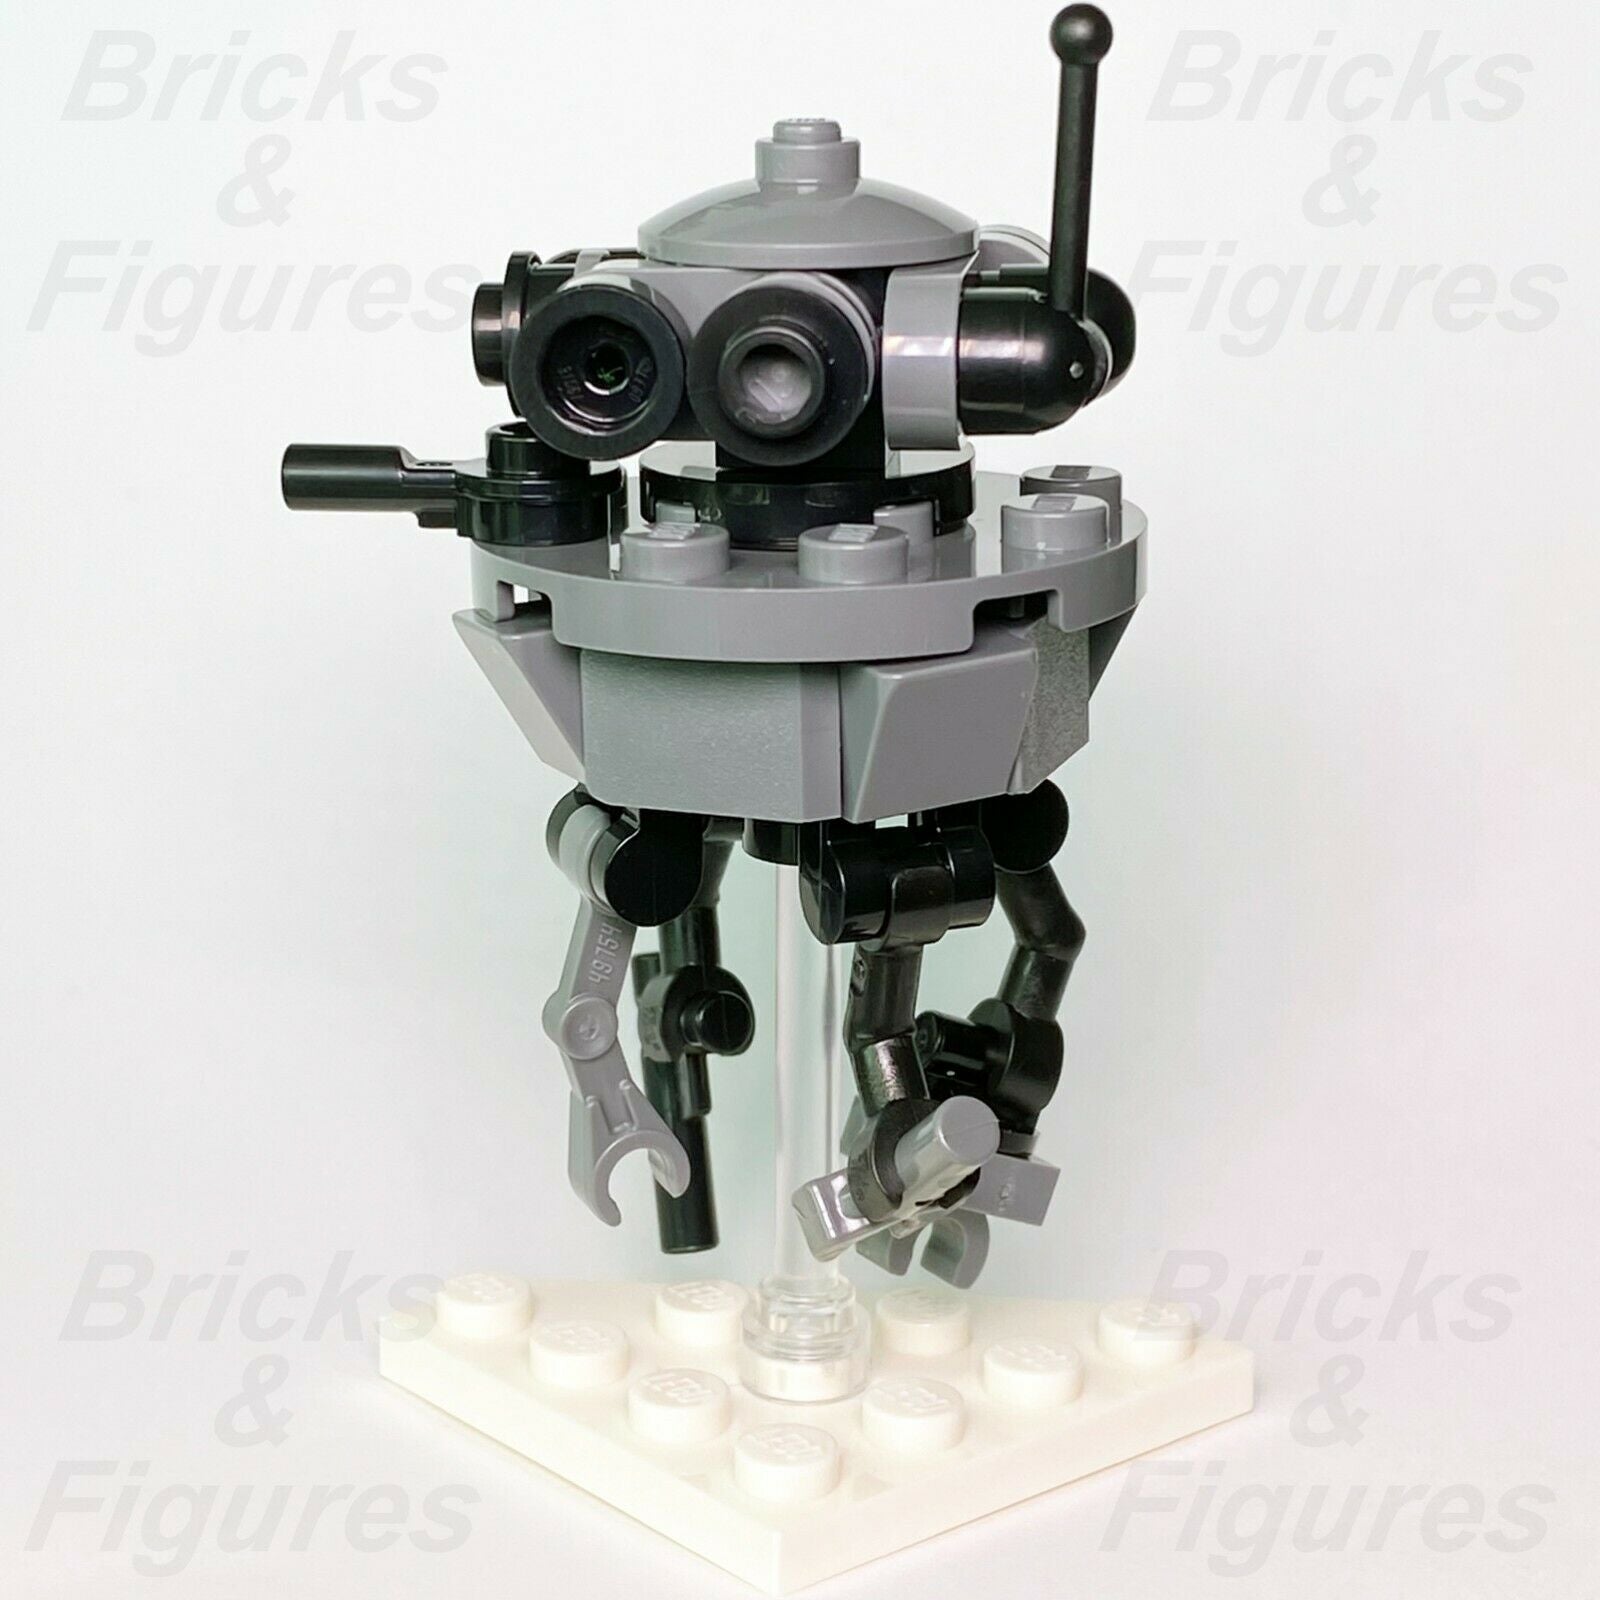 New Star Wars LEGO Imperial Probe Droid Hoth TESB Minifigure 75322 sw1190 - Bricks & Figures